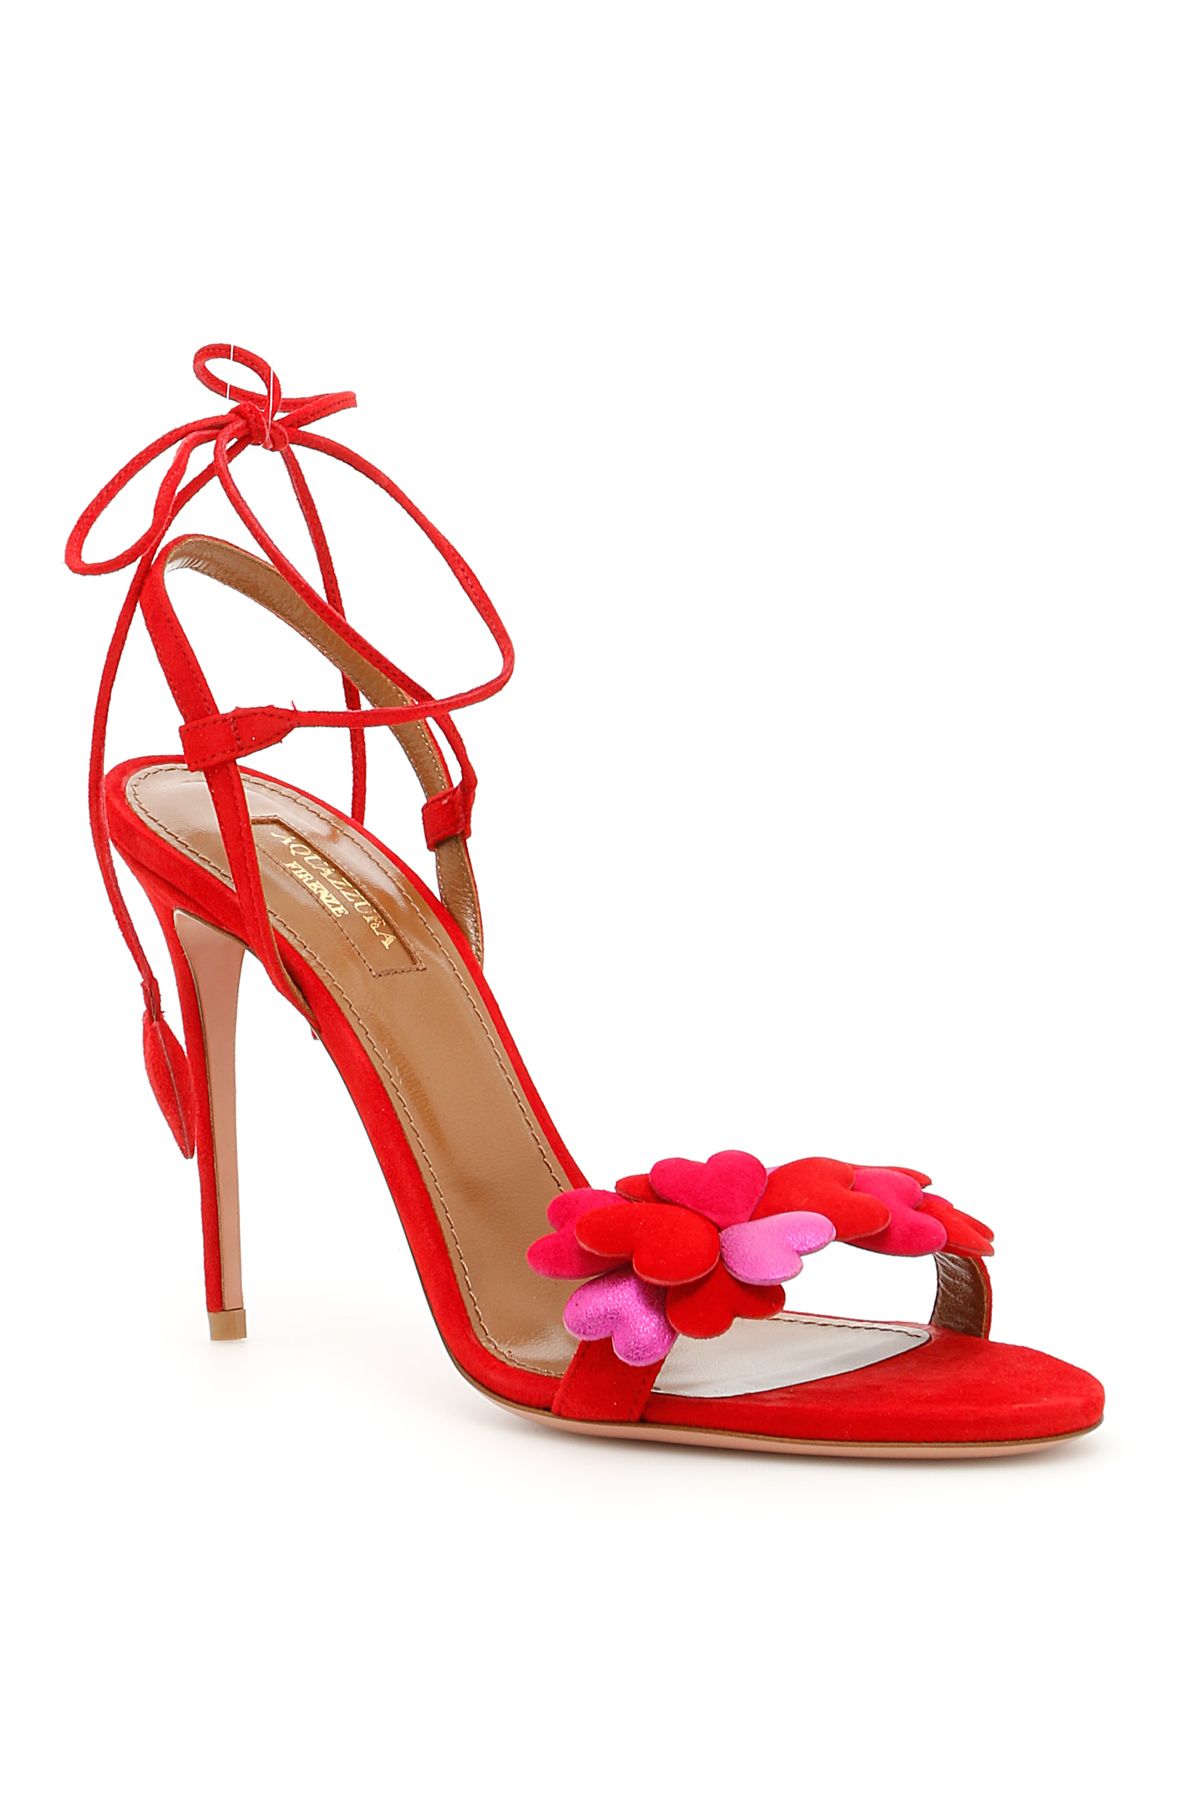 AQUAZZURA Happy Hearts Suede Sandals in Red Multi | ModeSens